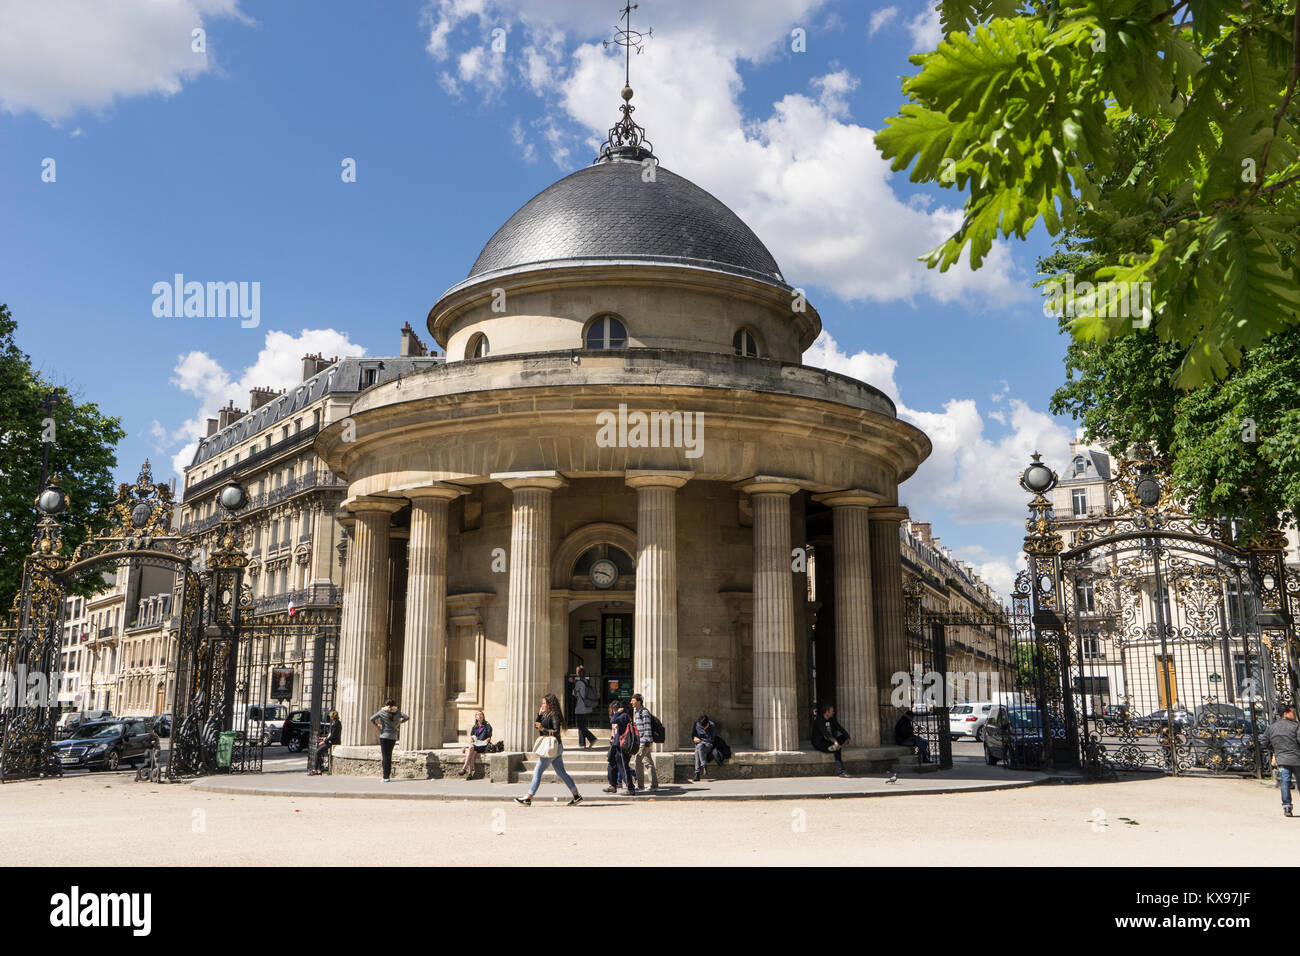 Padiglione presso l'entrata al Parc Monceau, Paris, Francia Foto Stock